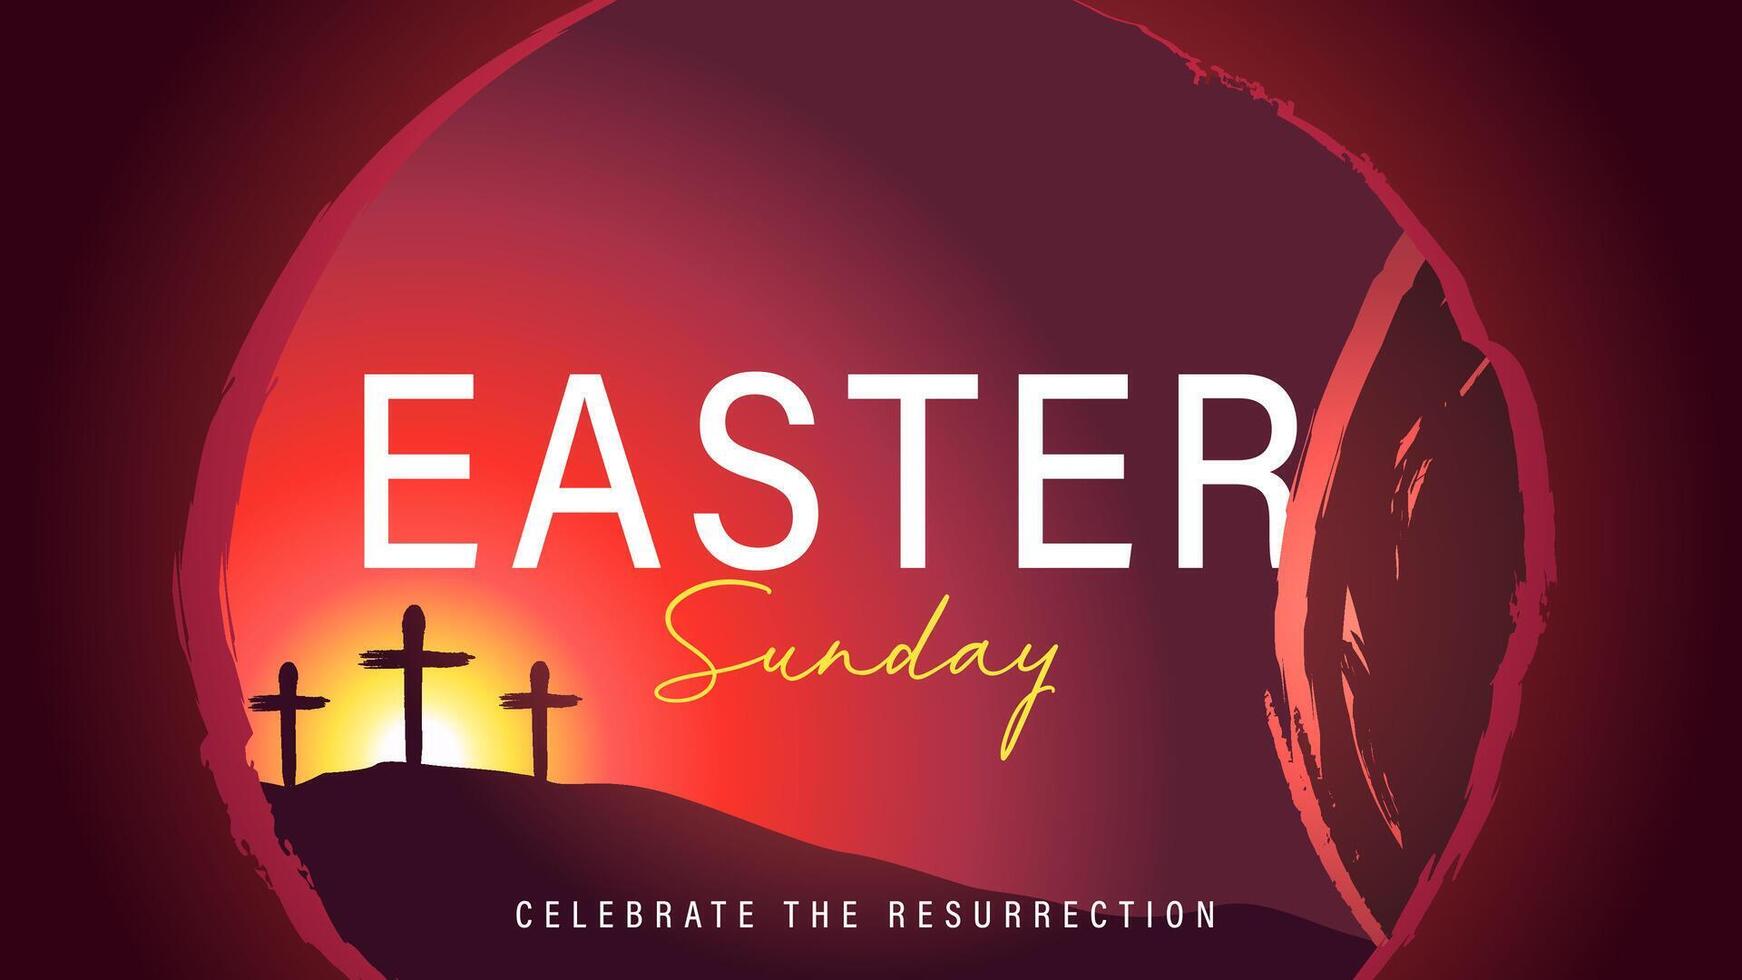 Pascua de Resurrección domingo mañana, vector ilustración. cristiano bandera. red póster.